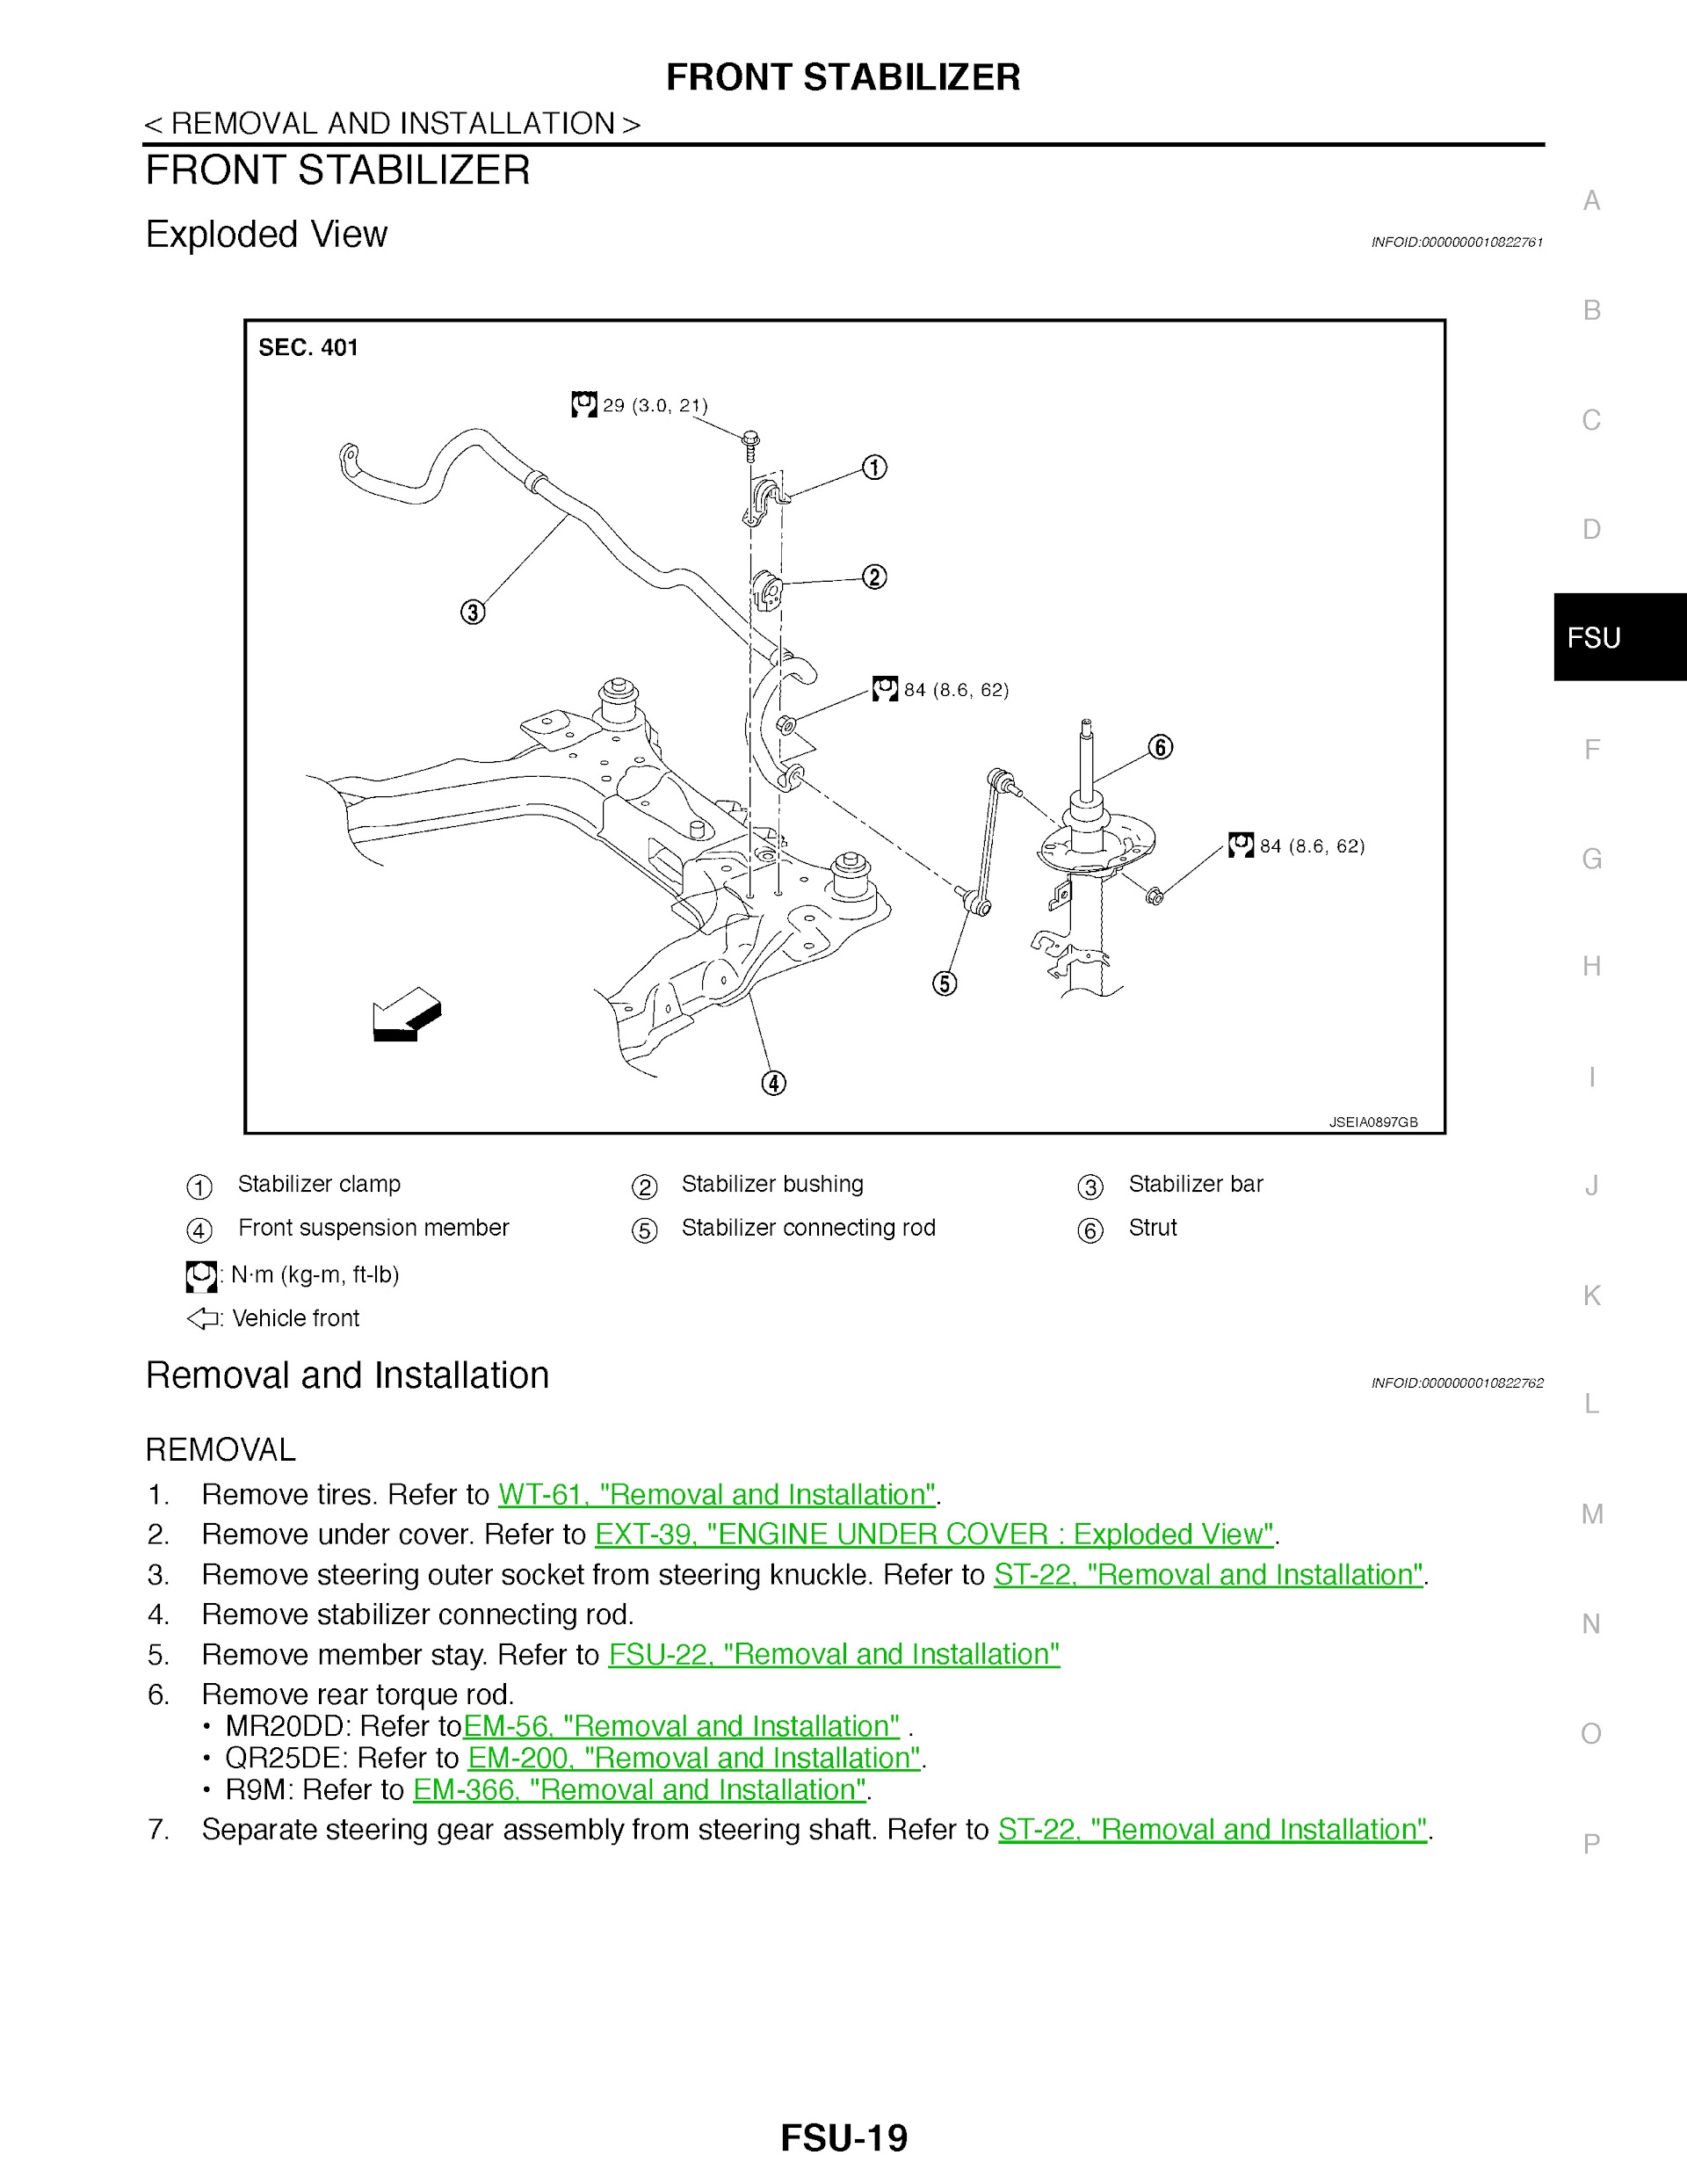 2020 Nissan X-Trail Repair Manual, Front Stabilizer